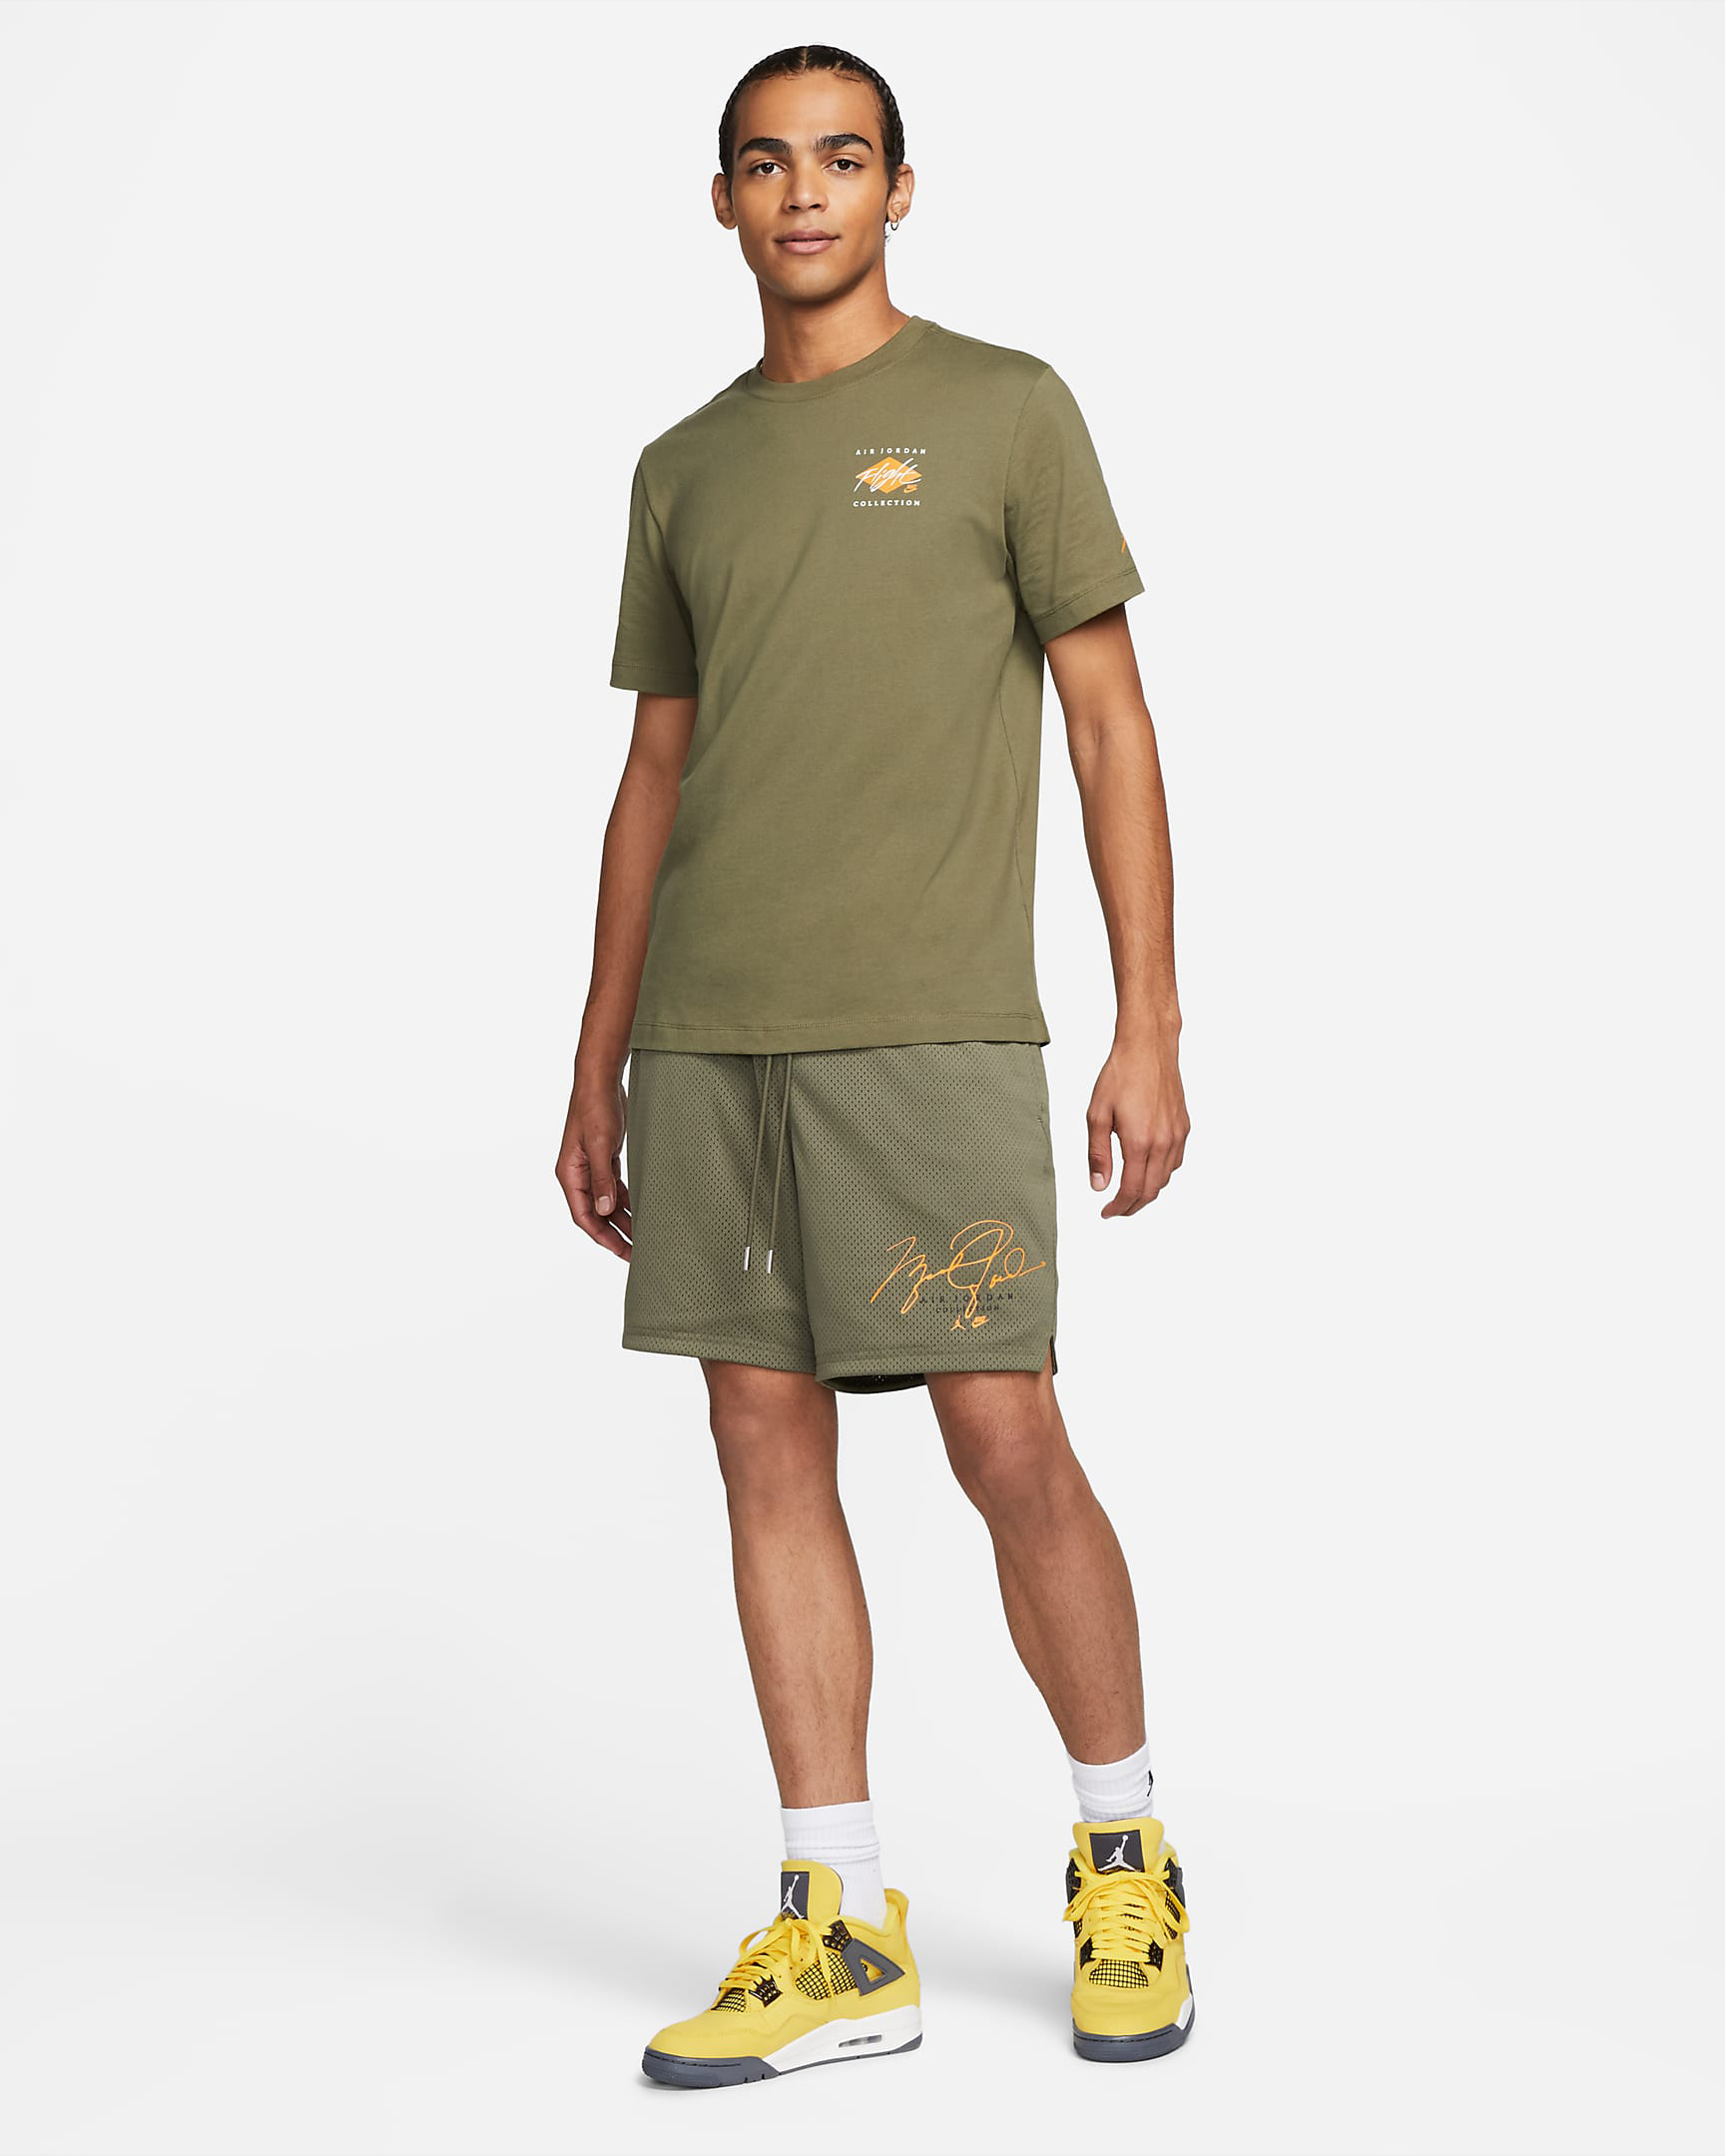 jordan-medium-olive-sneaker-clothing-outfit-4